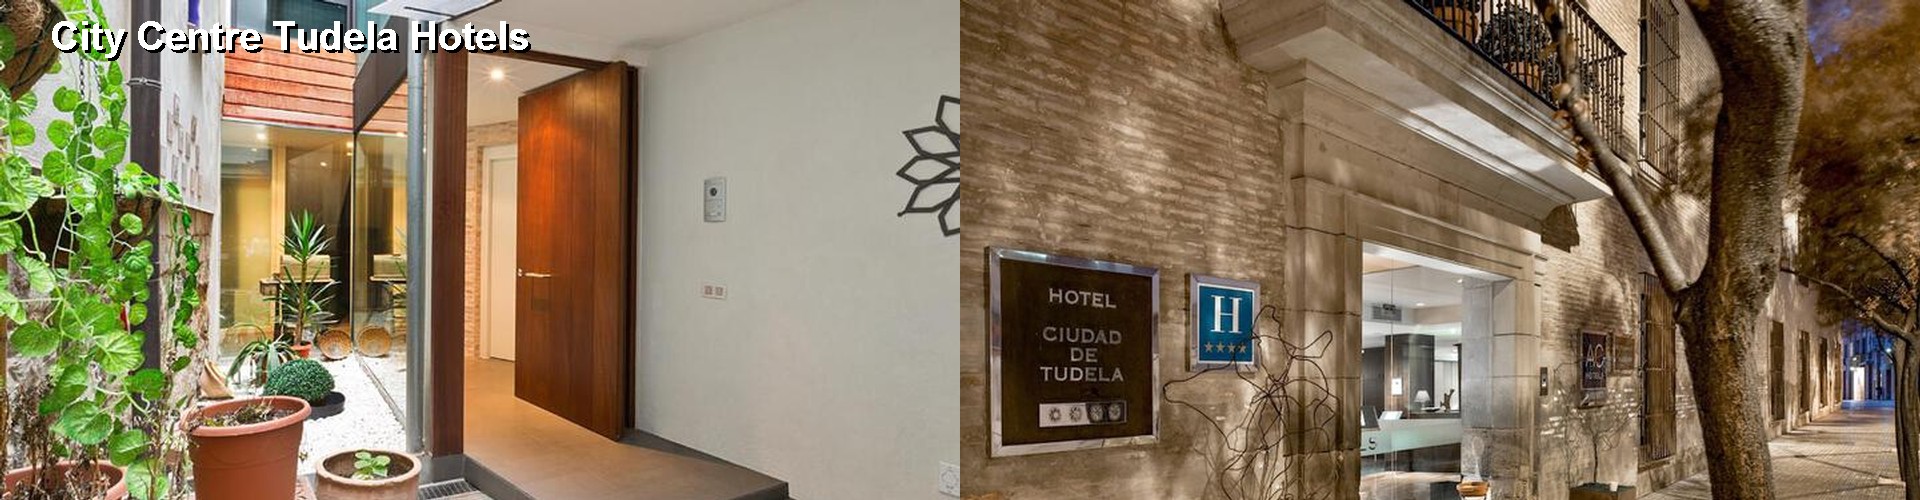 3 Best Hotels near City Centre Tudela